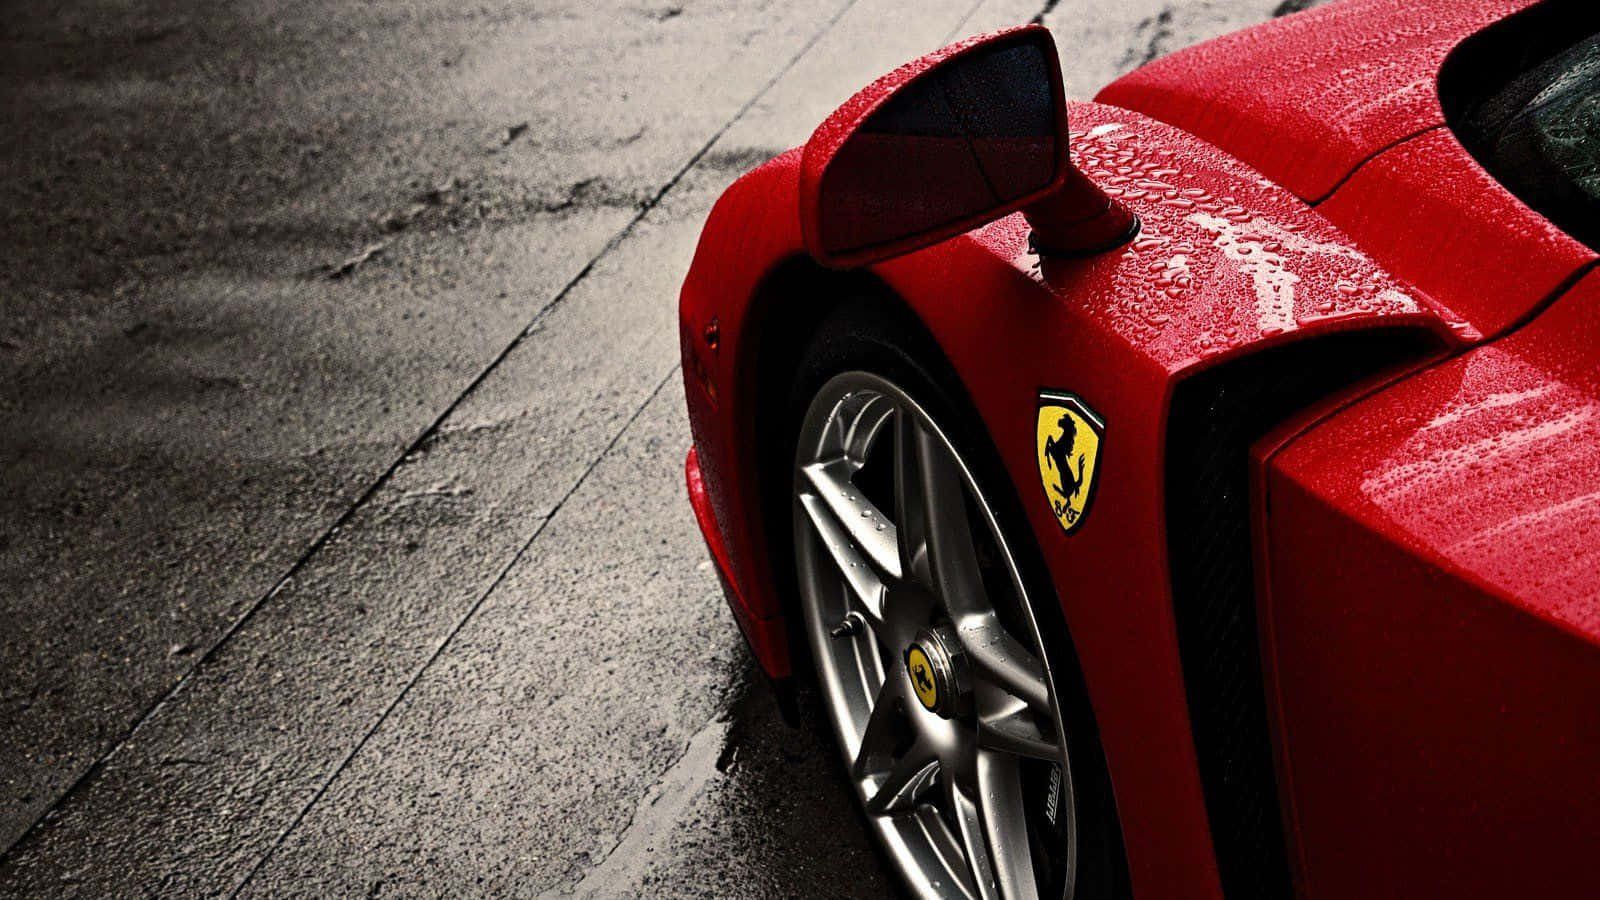 Ferrari Enzo in Action Wallpaper